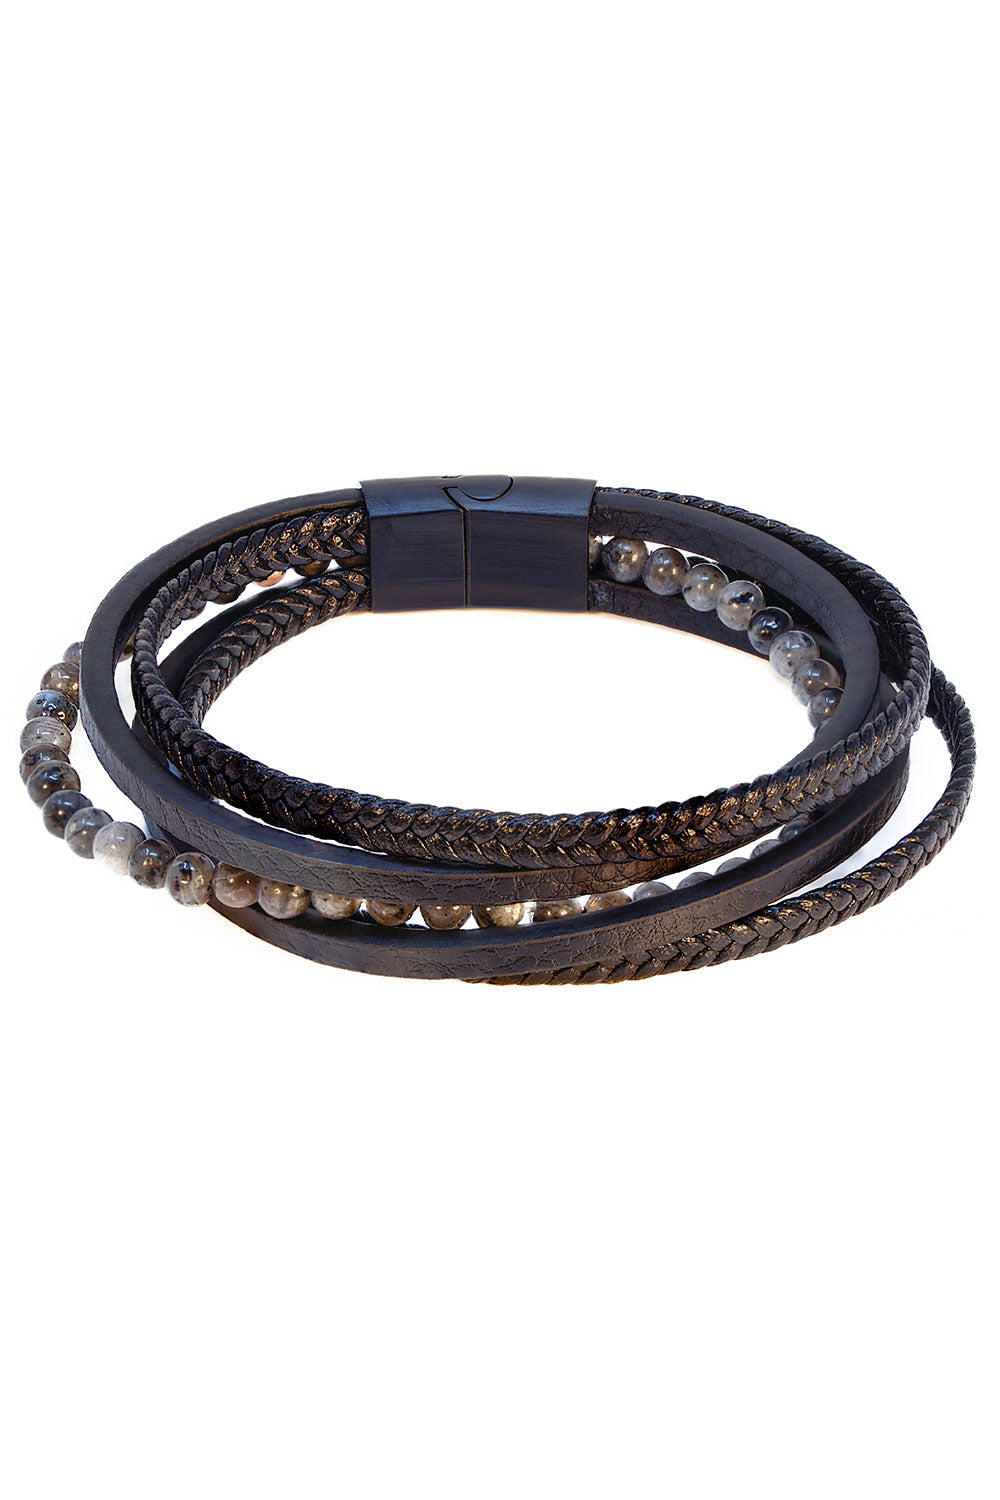 Barabas Unisex Beaded Multi-Layer Leather Magnetic Bracelets 4BMS08 Black Grey